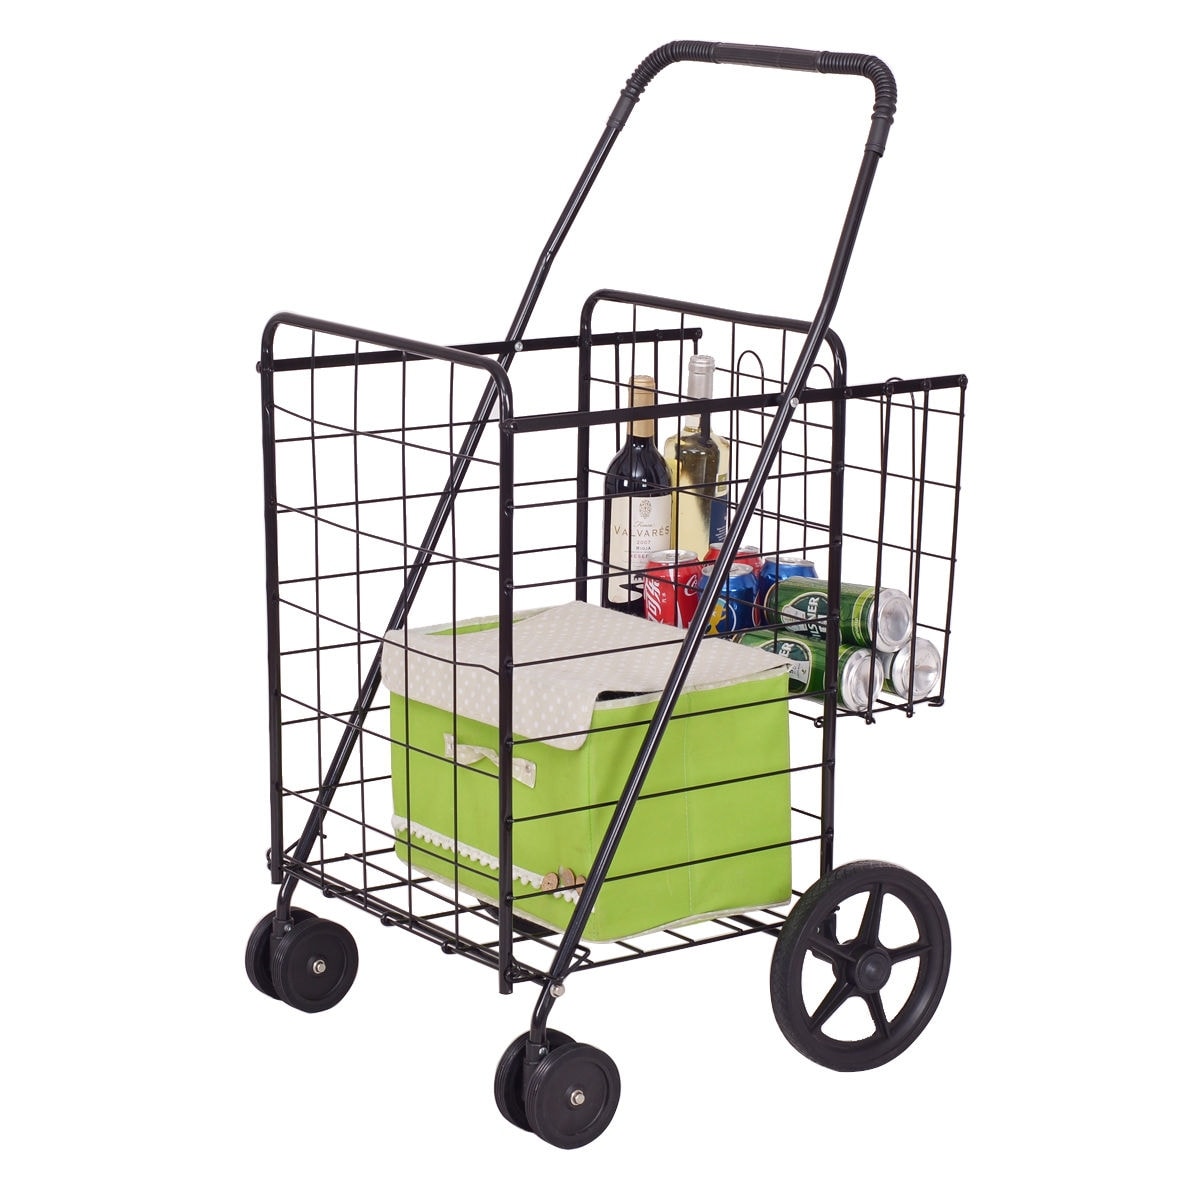 https://ak1.ostkcdn.com/images/products/is/images/direct/1acbf259c8f0a36b57fa6aeef7056f1a2df296f2/Costway-Folding-Shopping-Cart-Jumbo-Basket-Grocery-Laundry-Travel-w--Swivel-Wheels.jpg